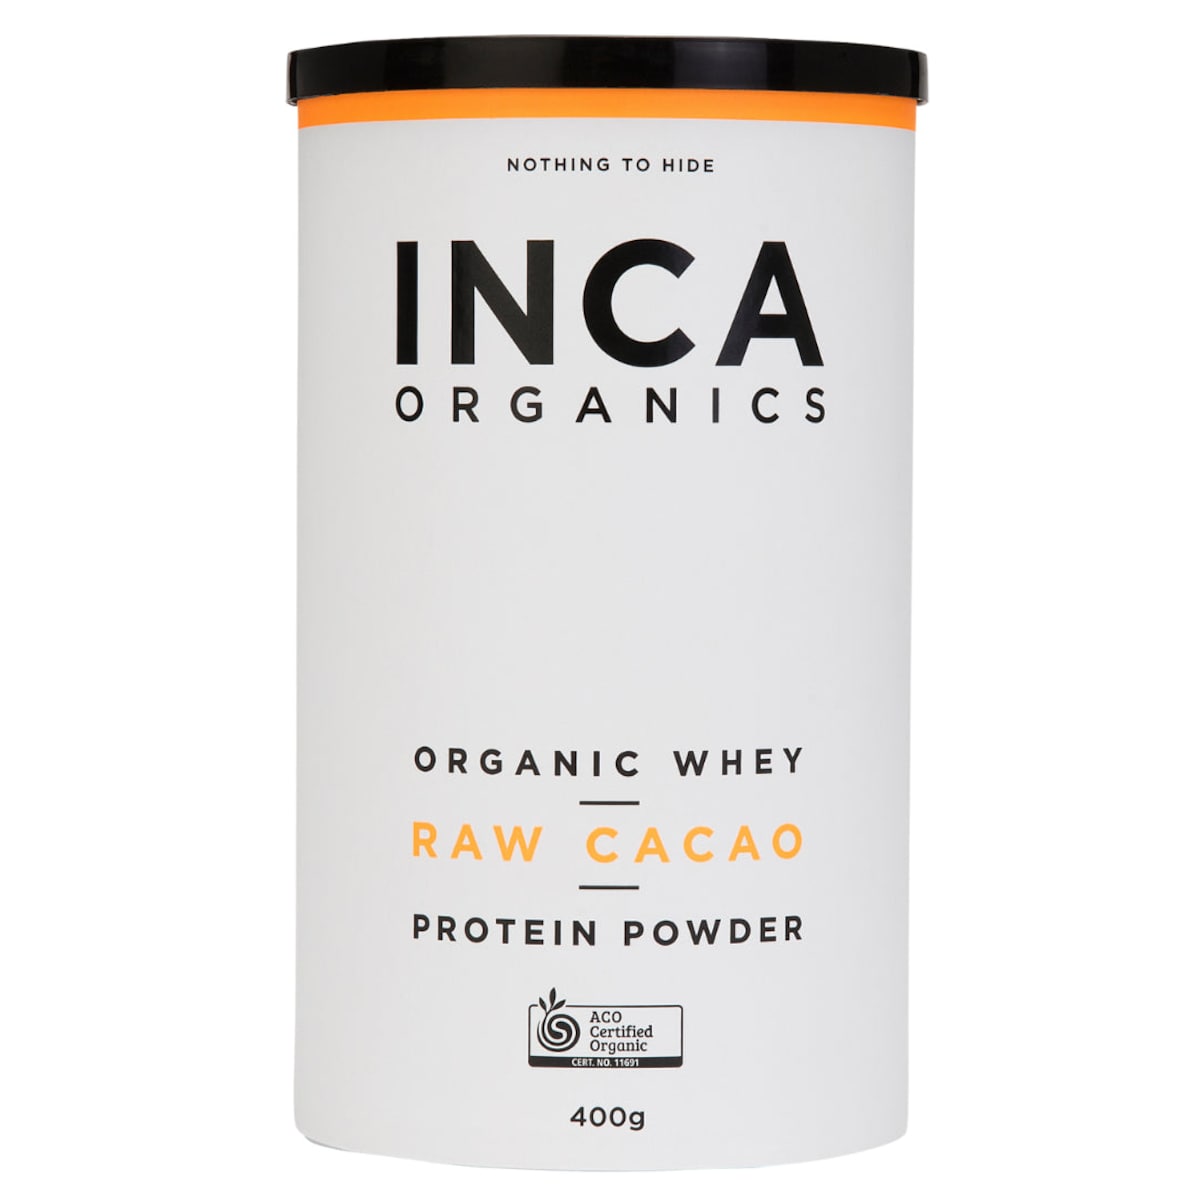 Inca Organics Organic Whey Raw Cacao Protein Powder 400g Australia